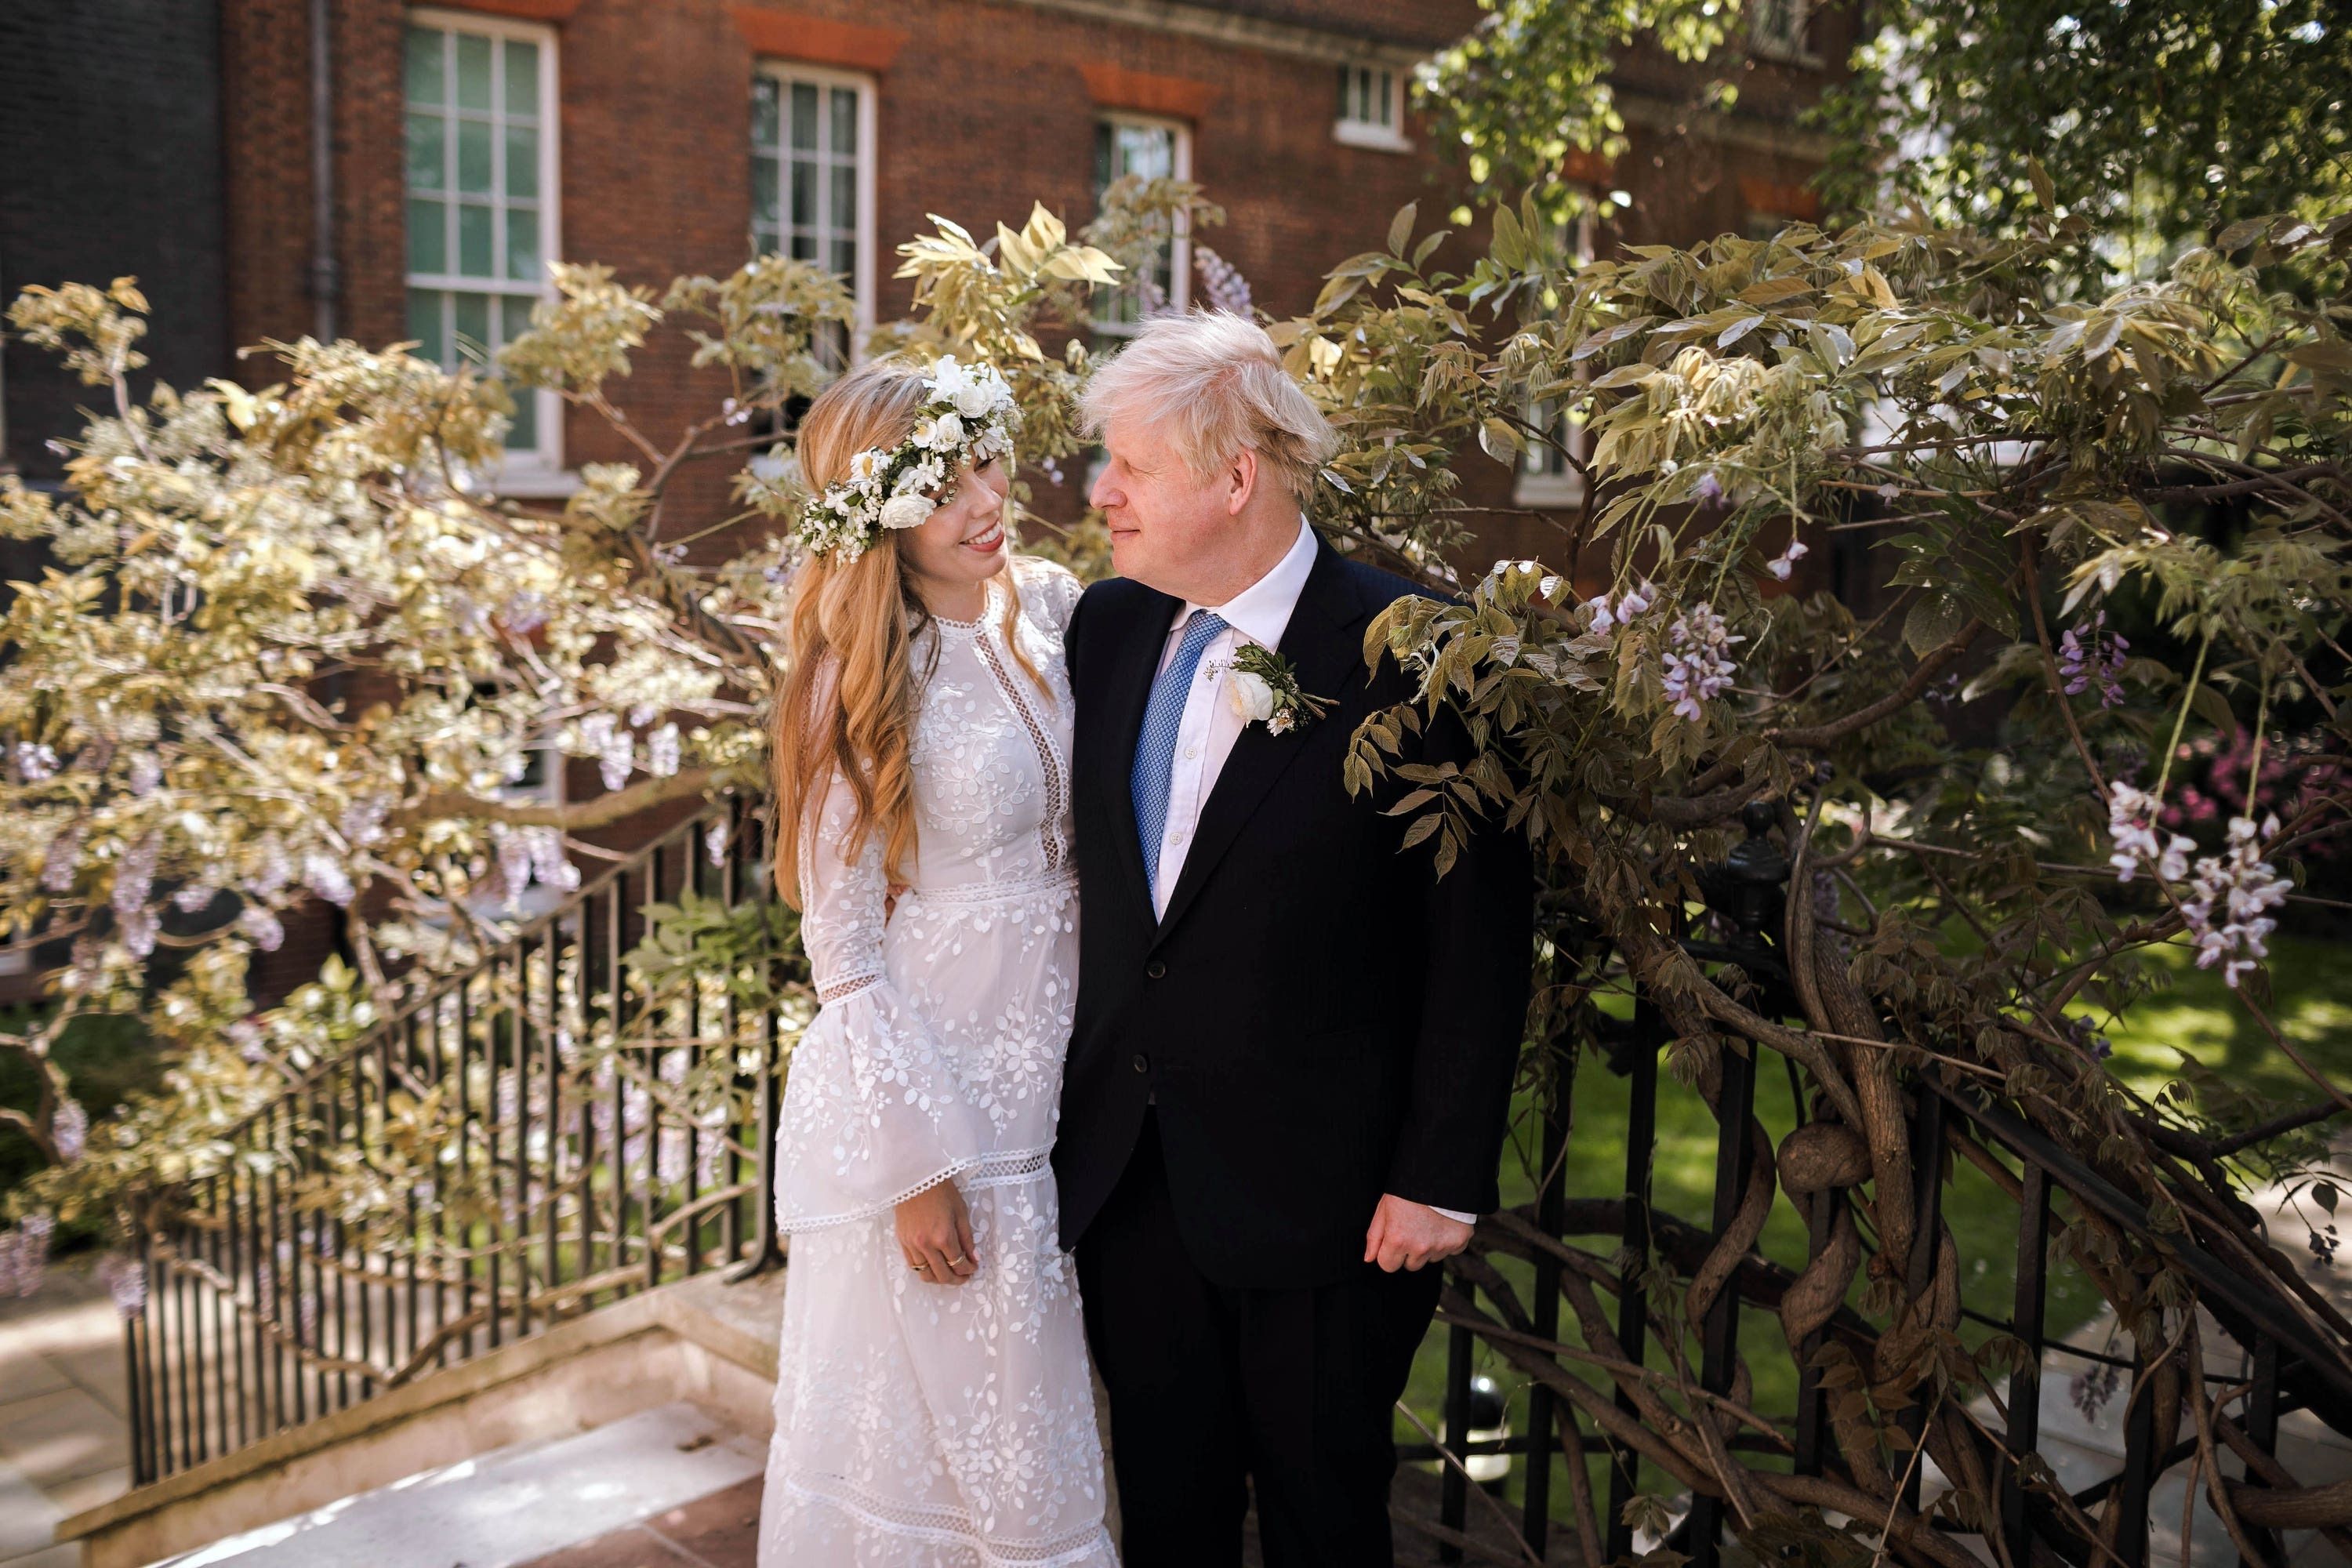 Carrie Symonds and Boris Johnson on their wedding